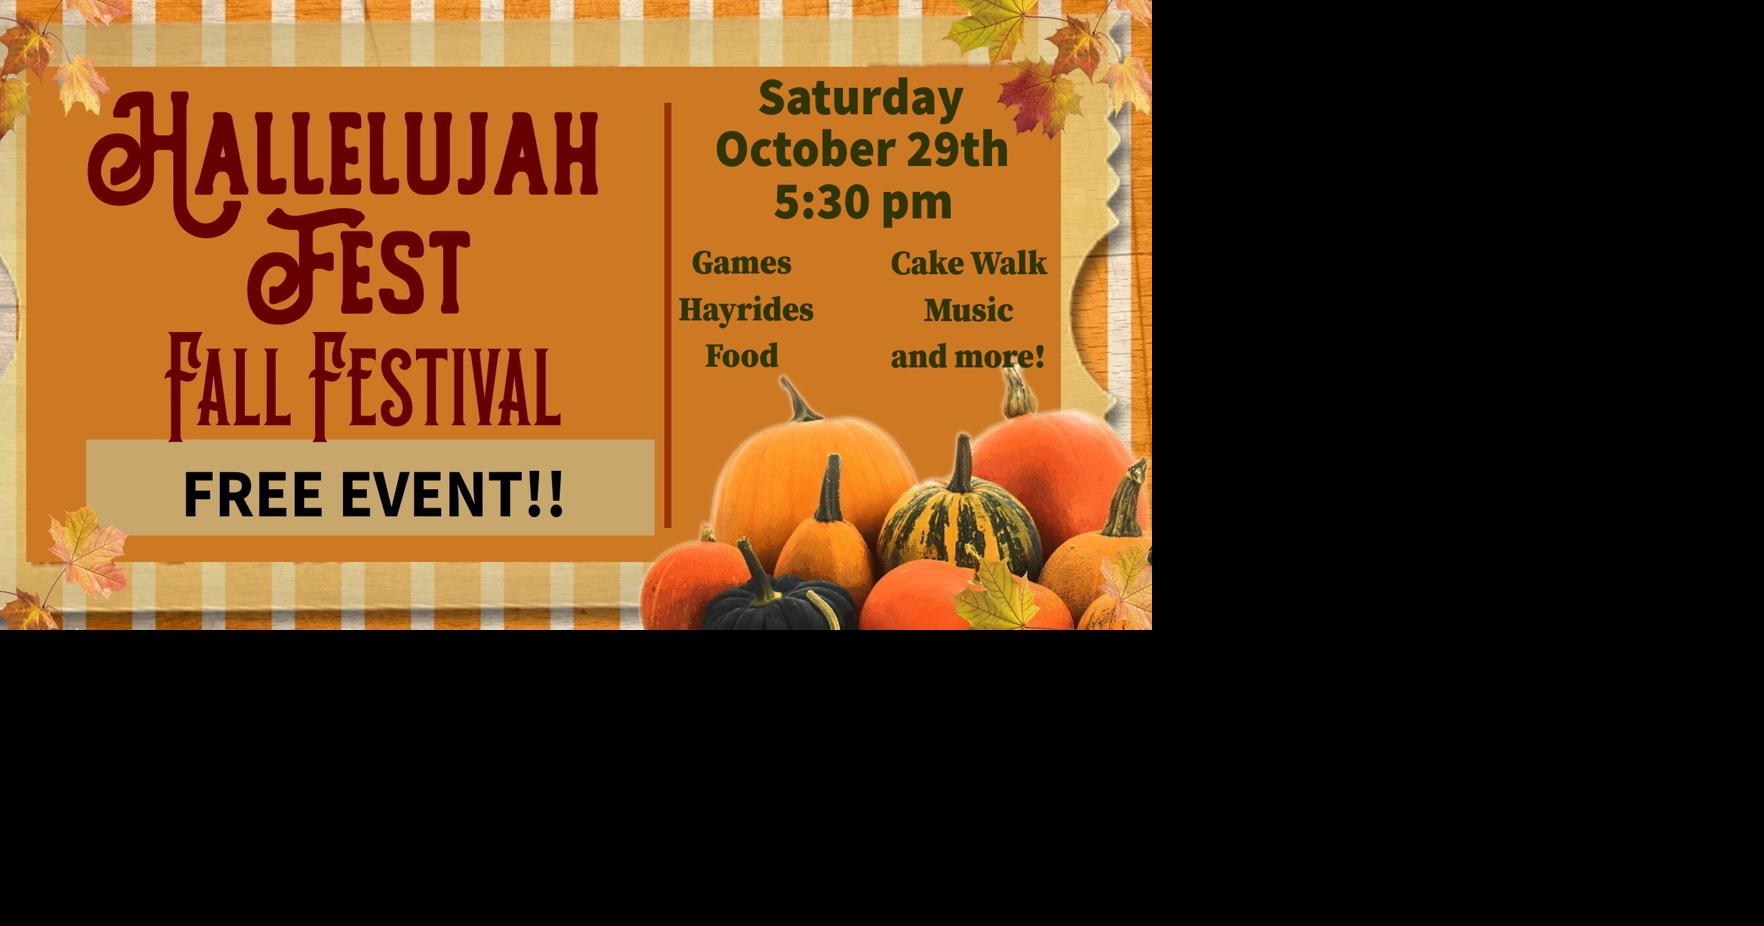 Hallelujah Fest Fall Festival | Calendar 